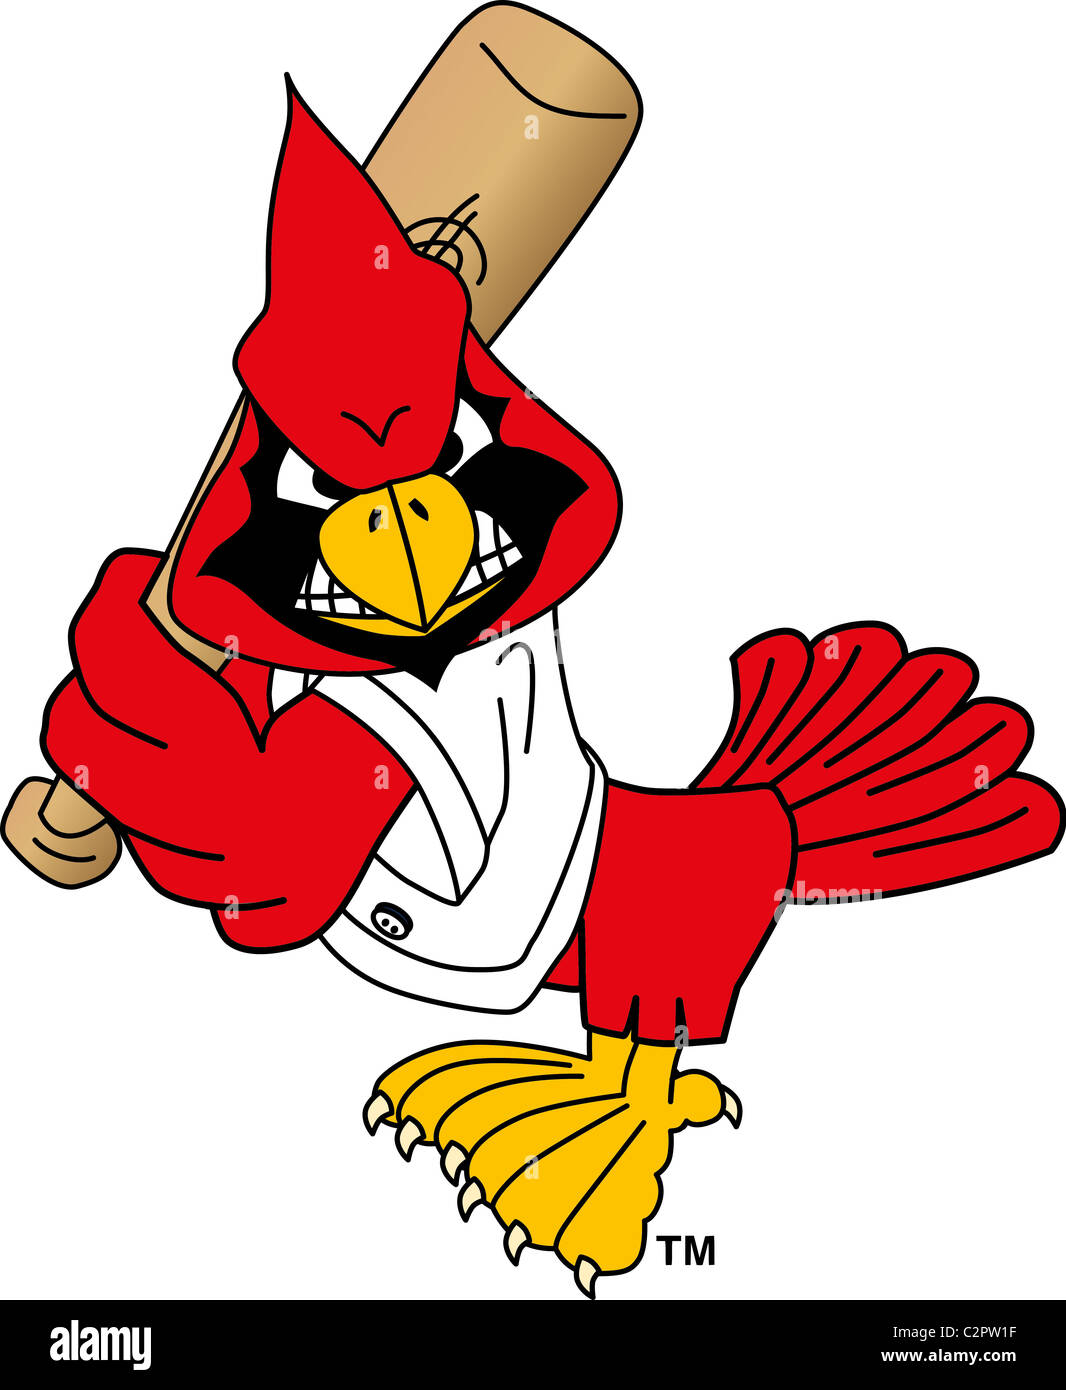 Cartoon Cardinal School Mascot Playing Baseball Stock Photo - Alamy